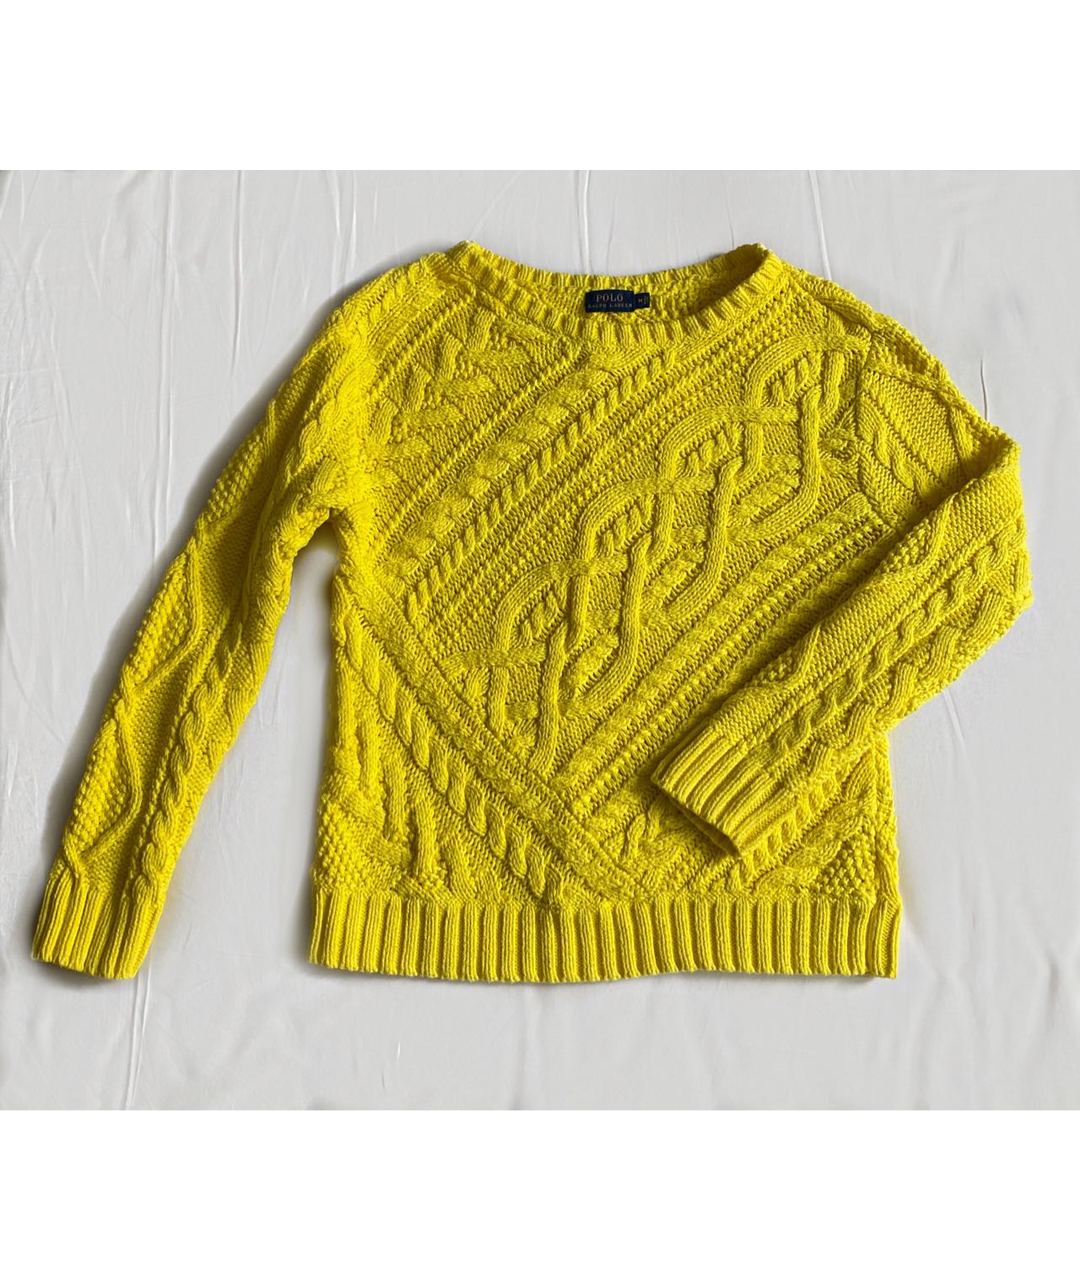 POLO RALPH LAUREN Желтый хлопковый джемпер / свитер, фото 6